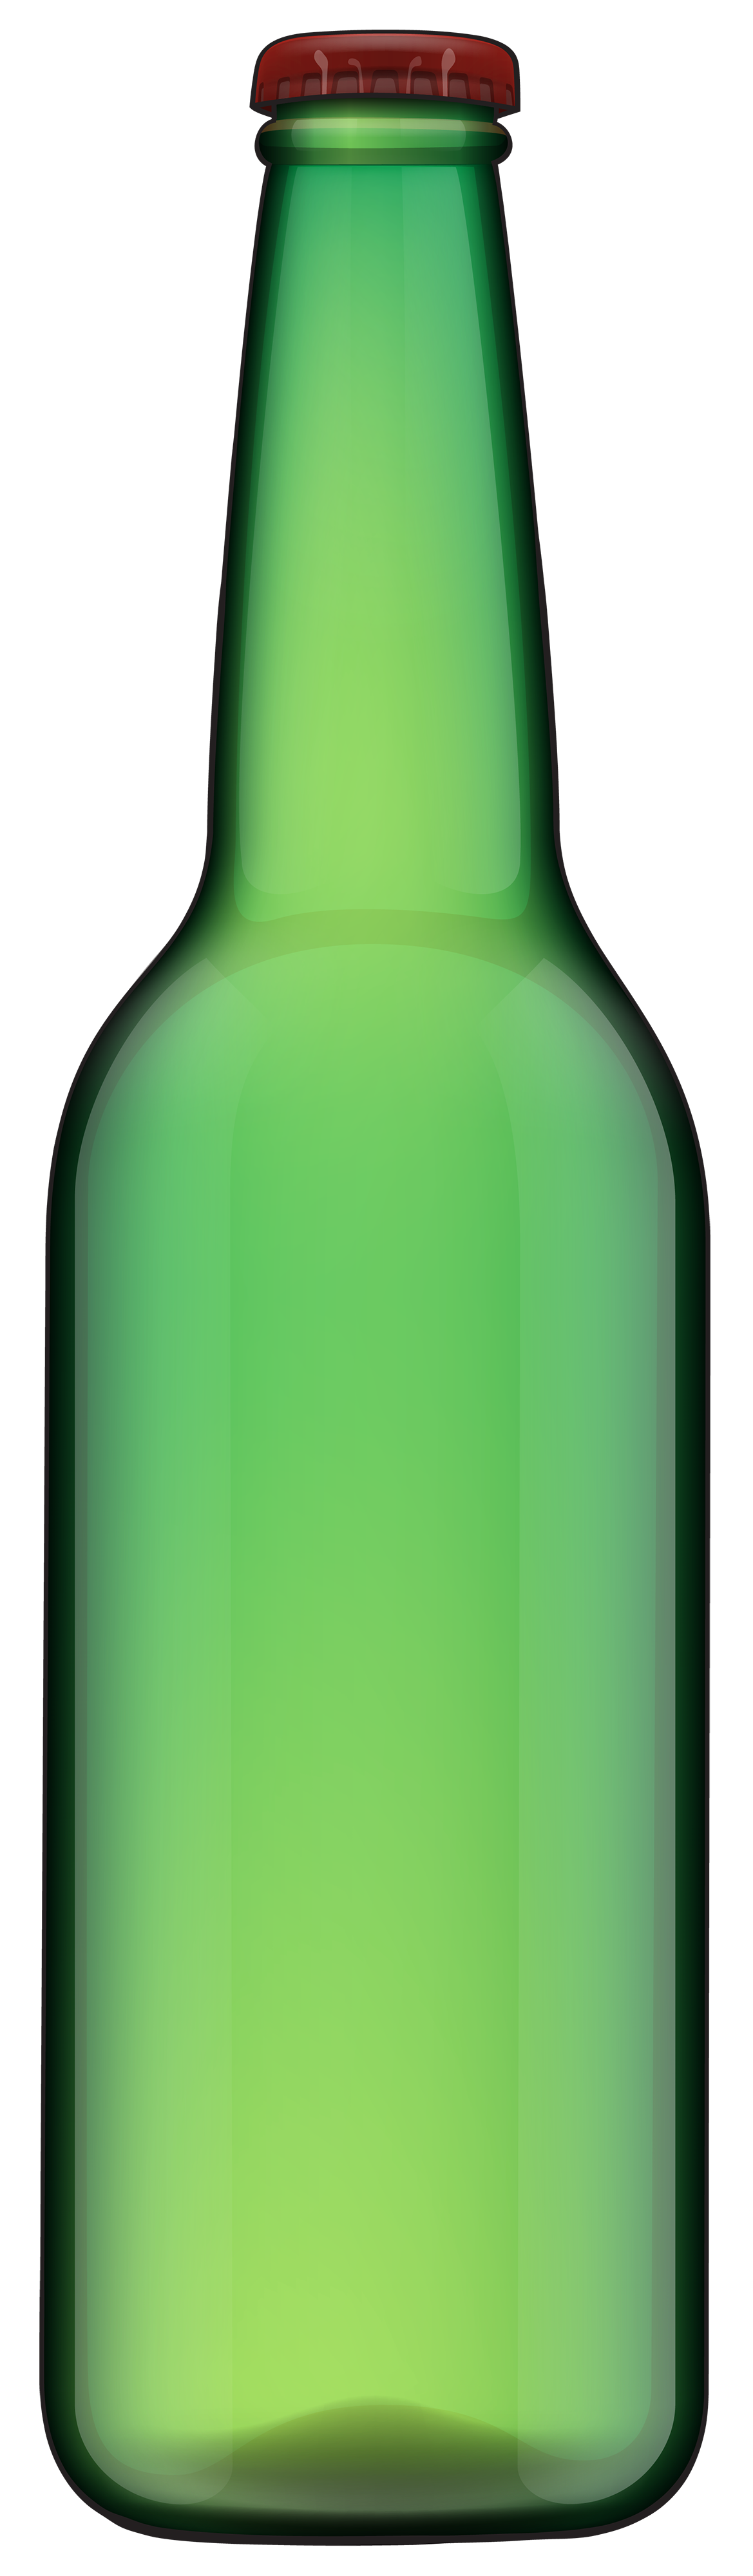 clipart glass bottle - photo #6